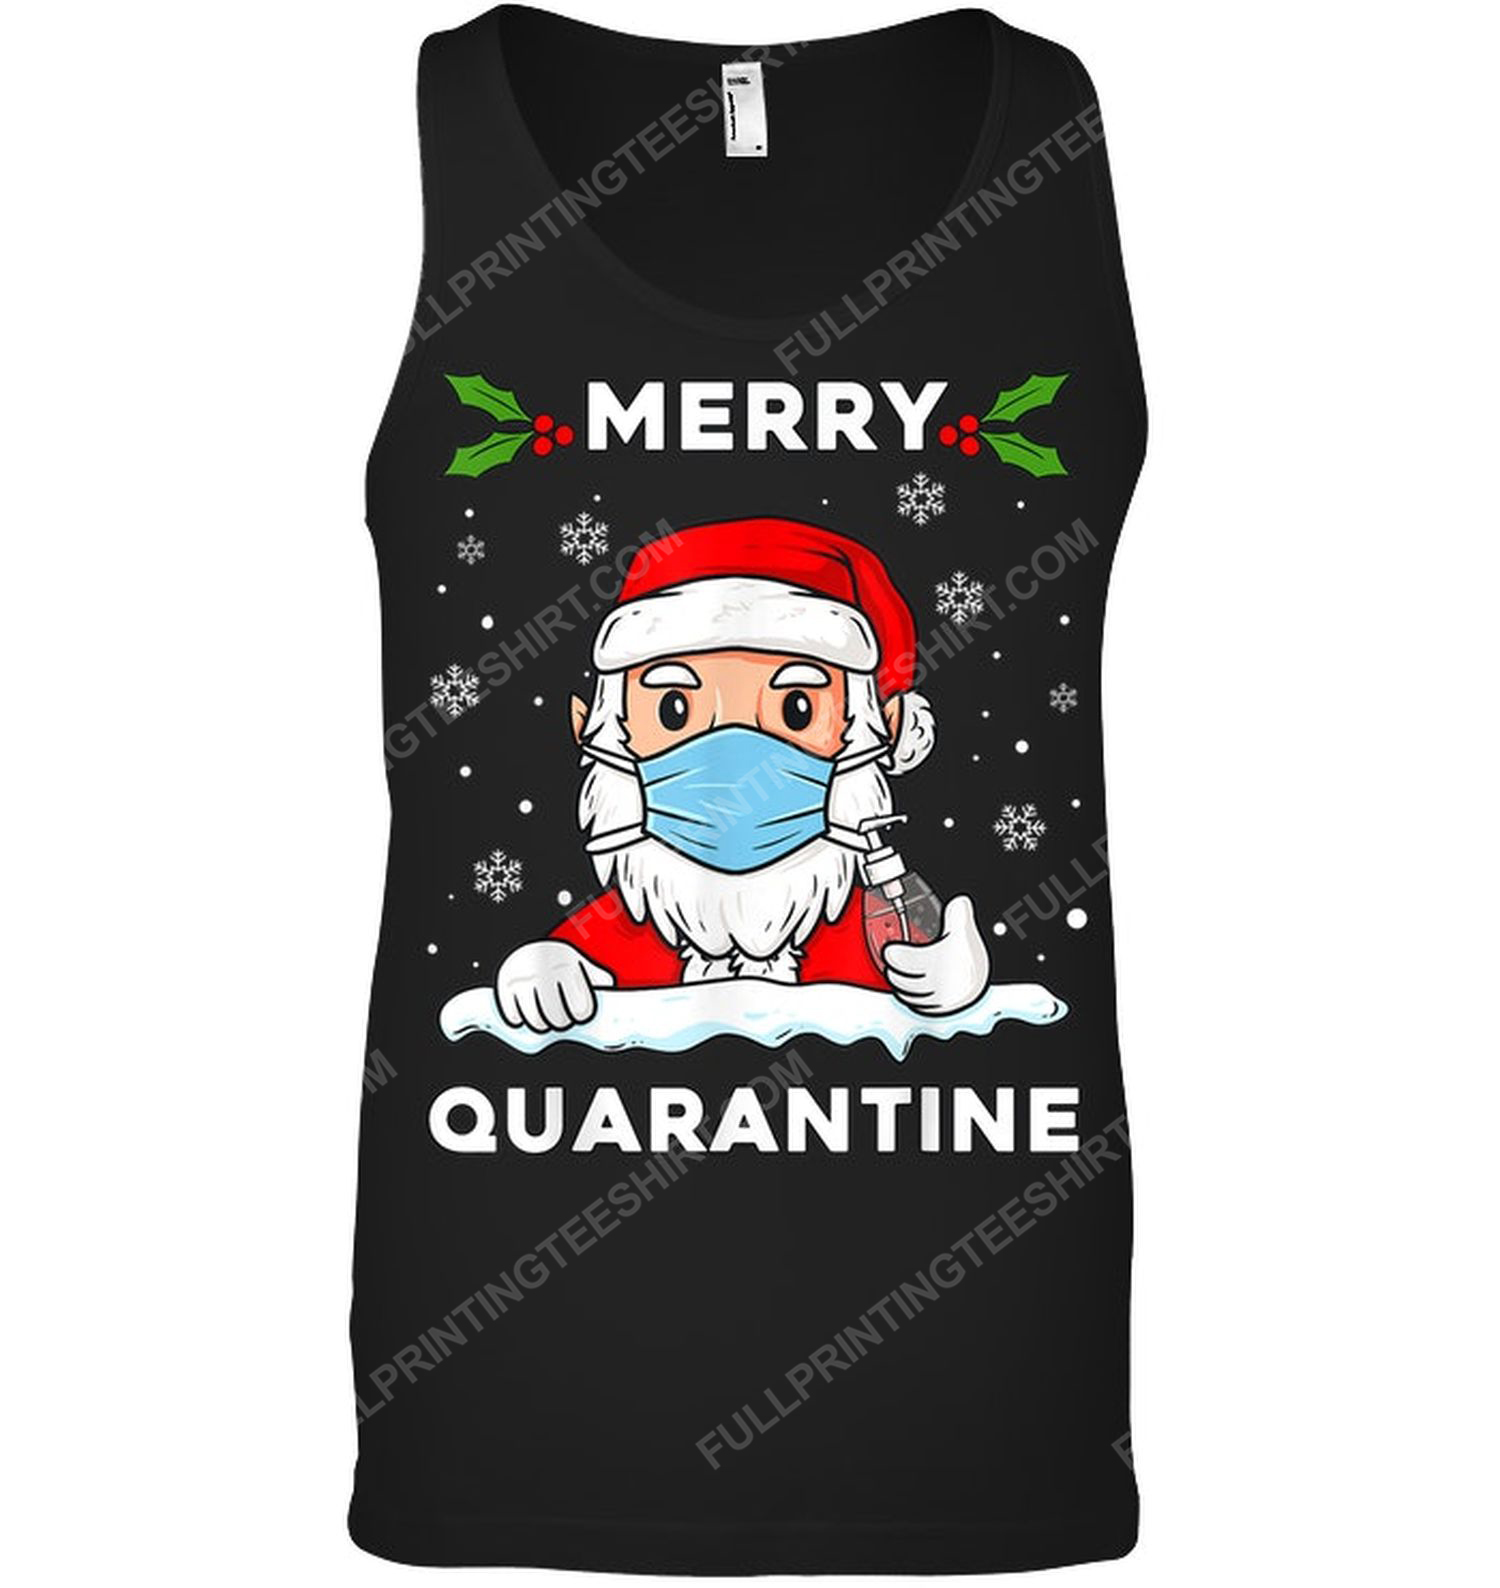 Merry quarantine christmas santa claus tank top